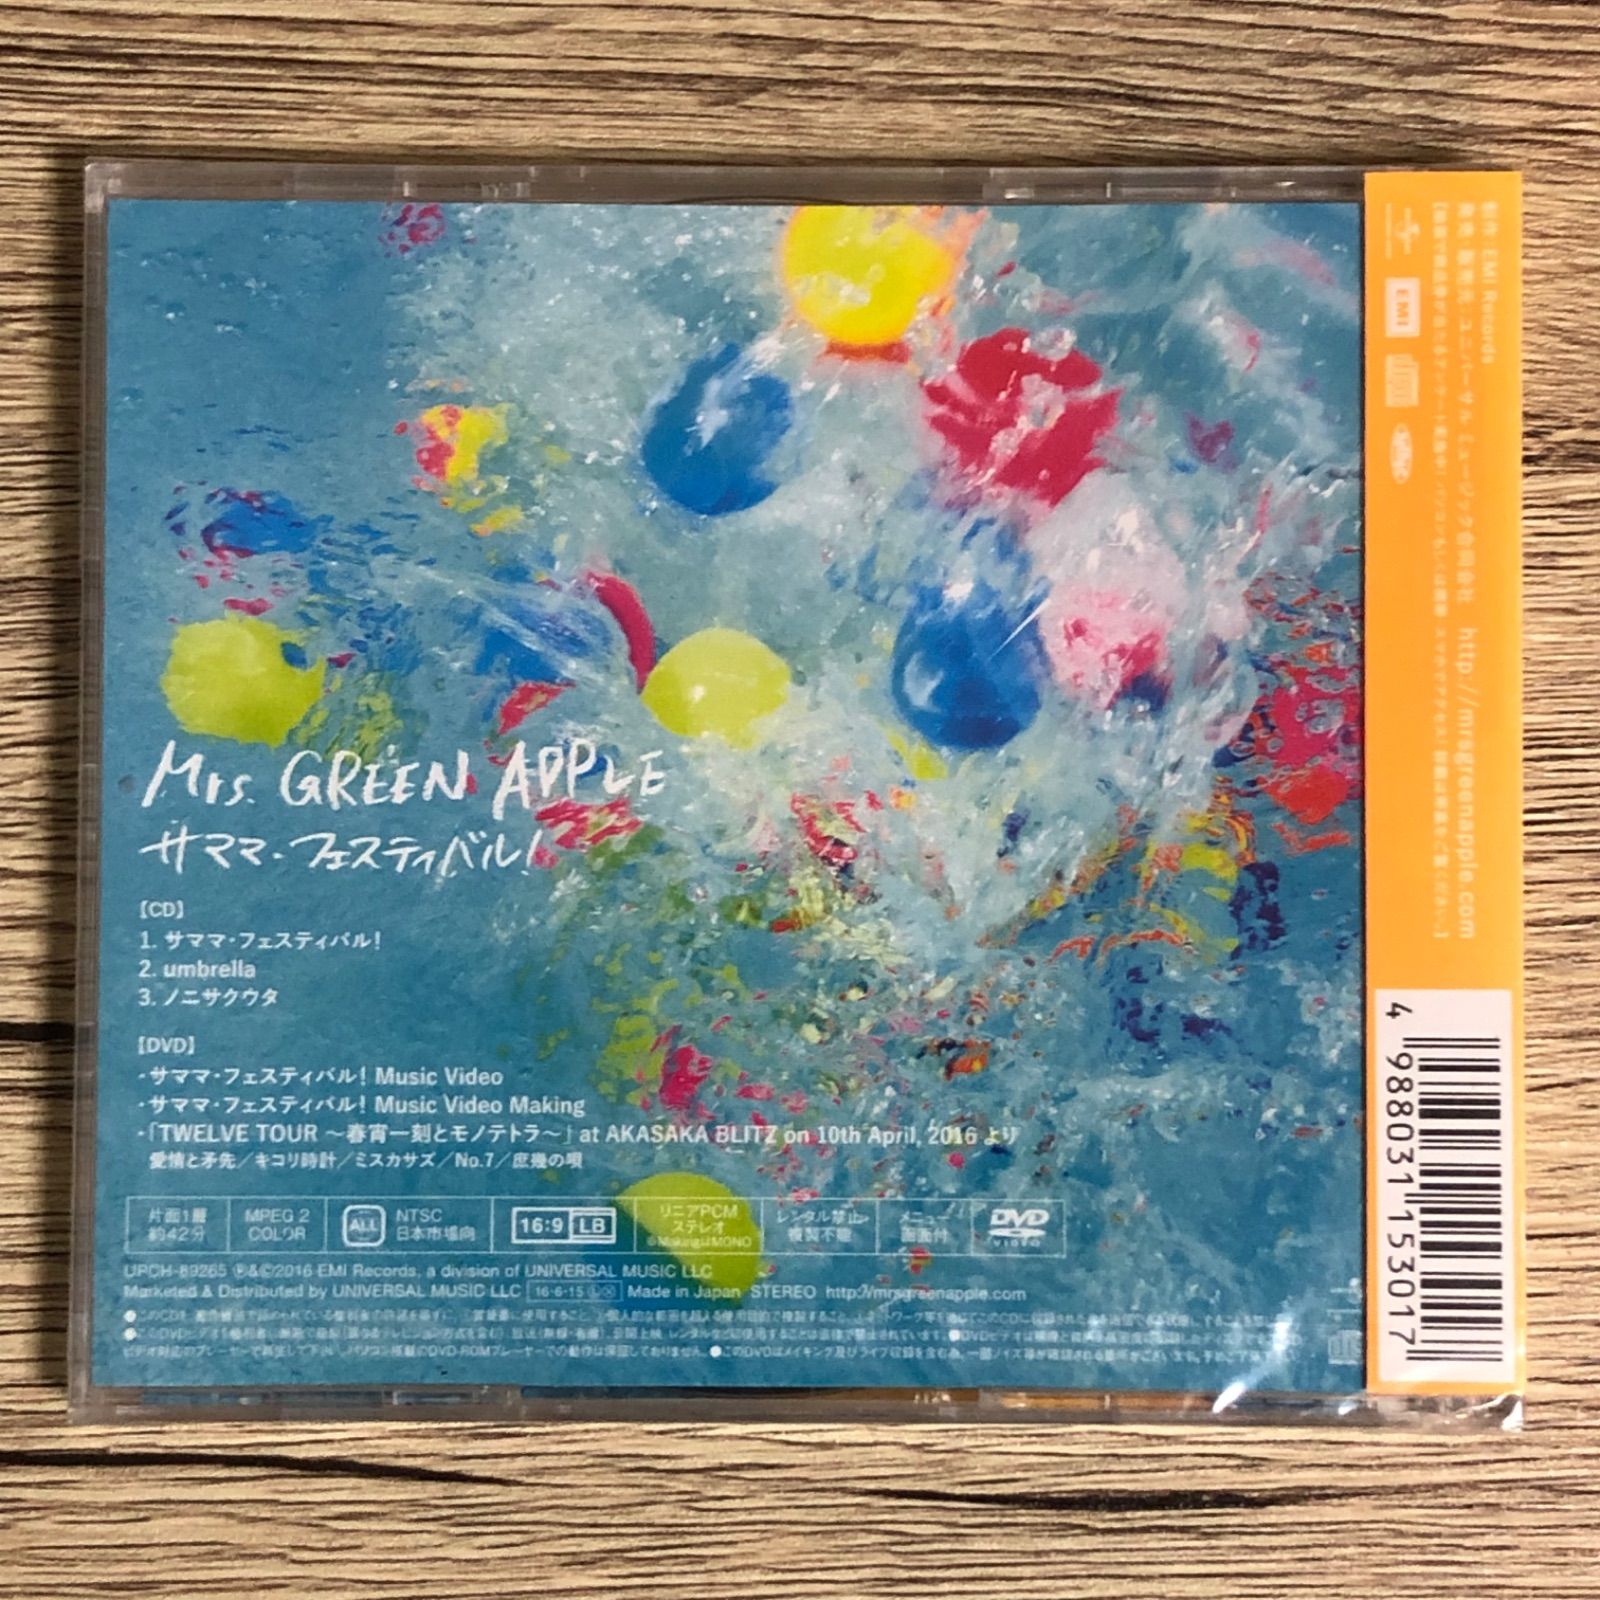 CDDVDサママ・フェスティバル! 初回限定盤 Mrs. GREEN APPLE - 邦楽